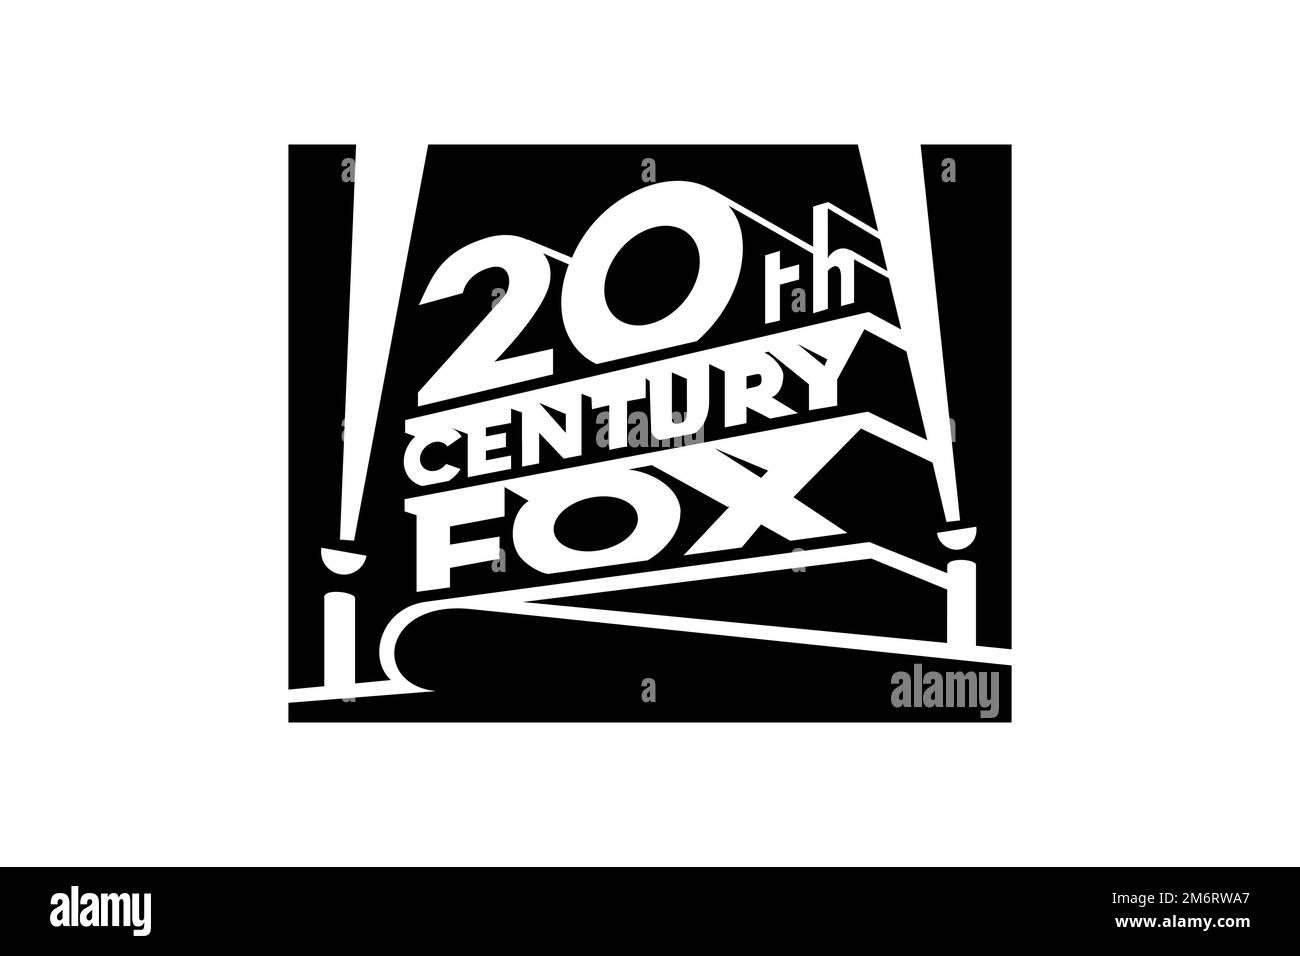 20TH CENTURY FOX LOGO Stock Photo - Alamy